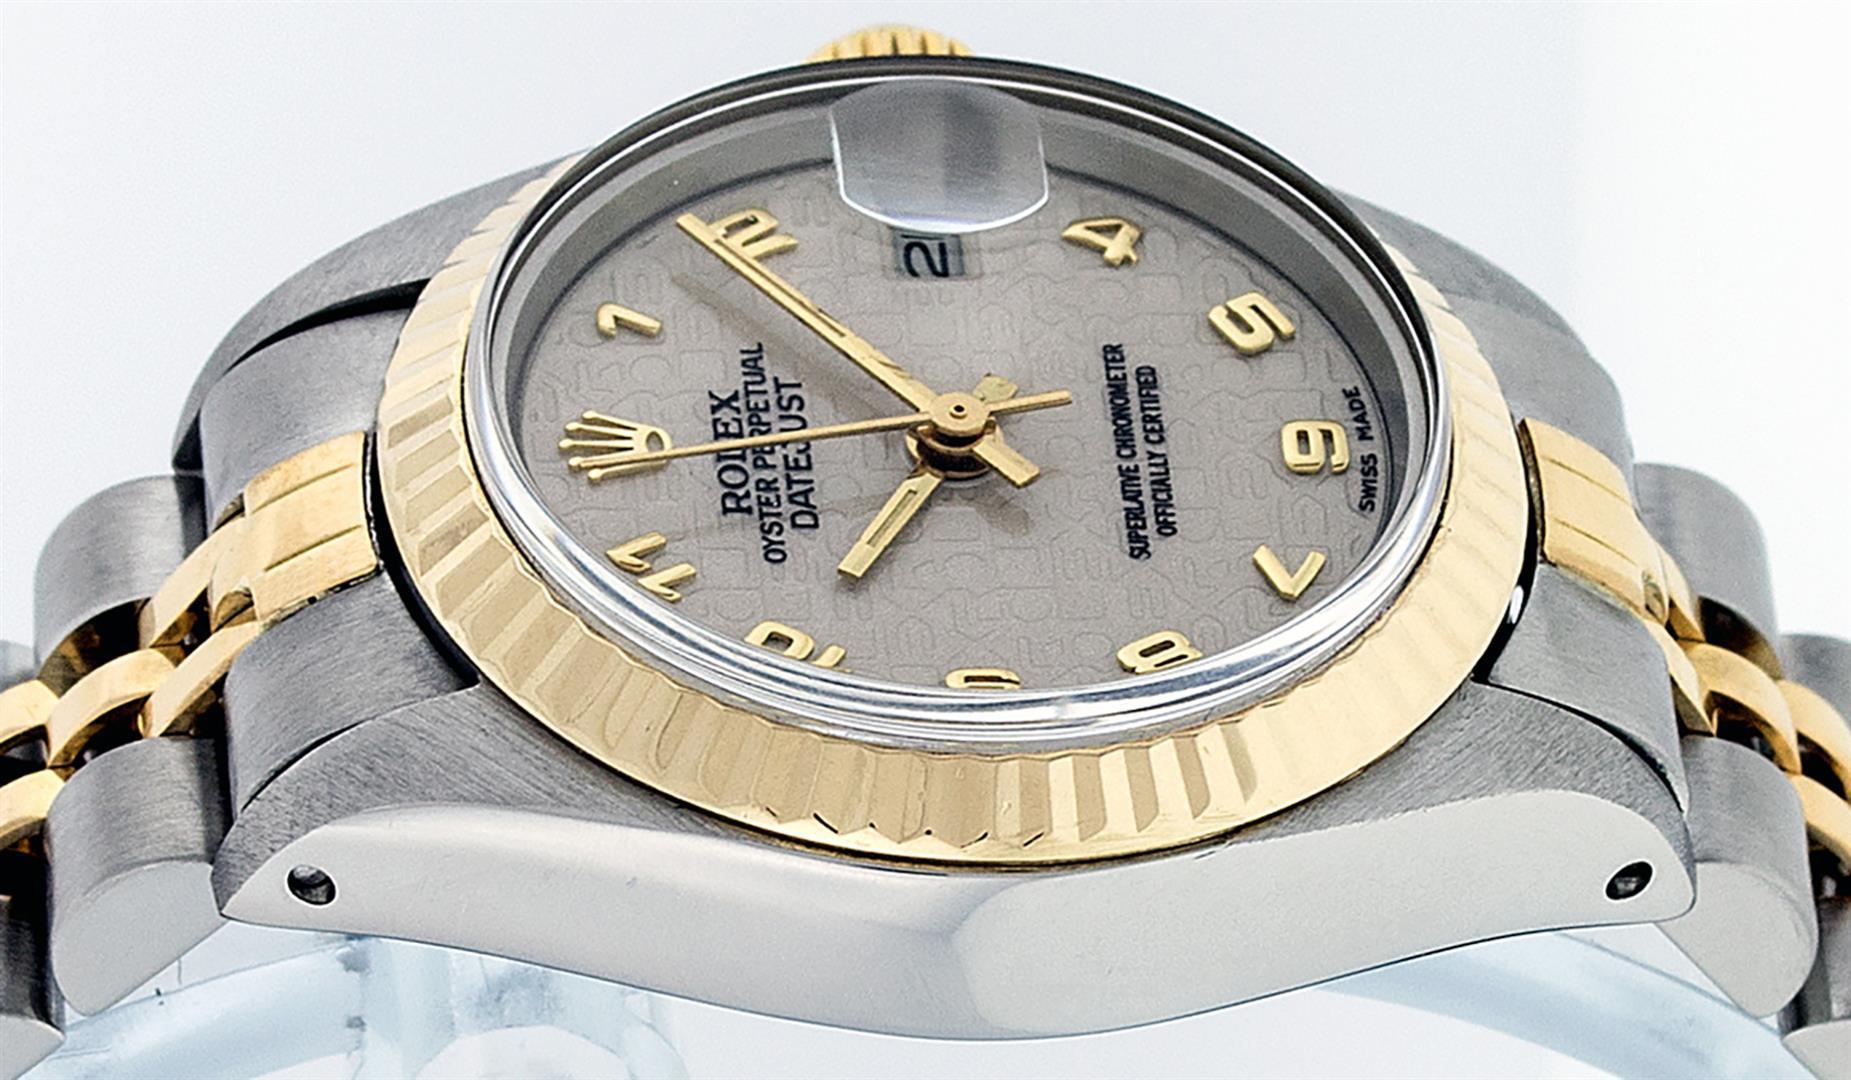 Rolex Ladies 2T Yellow Gold & Stainless Steel Cream Jubilee Wristwatch 26MM